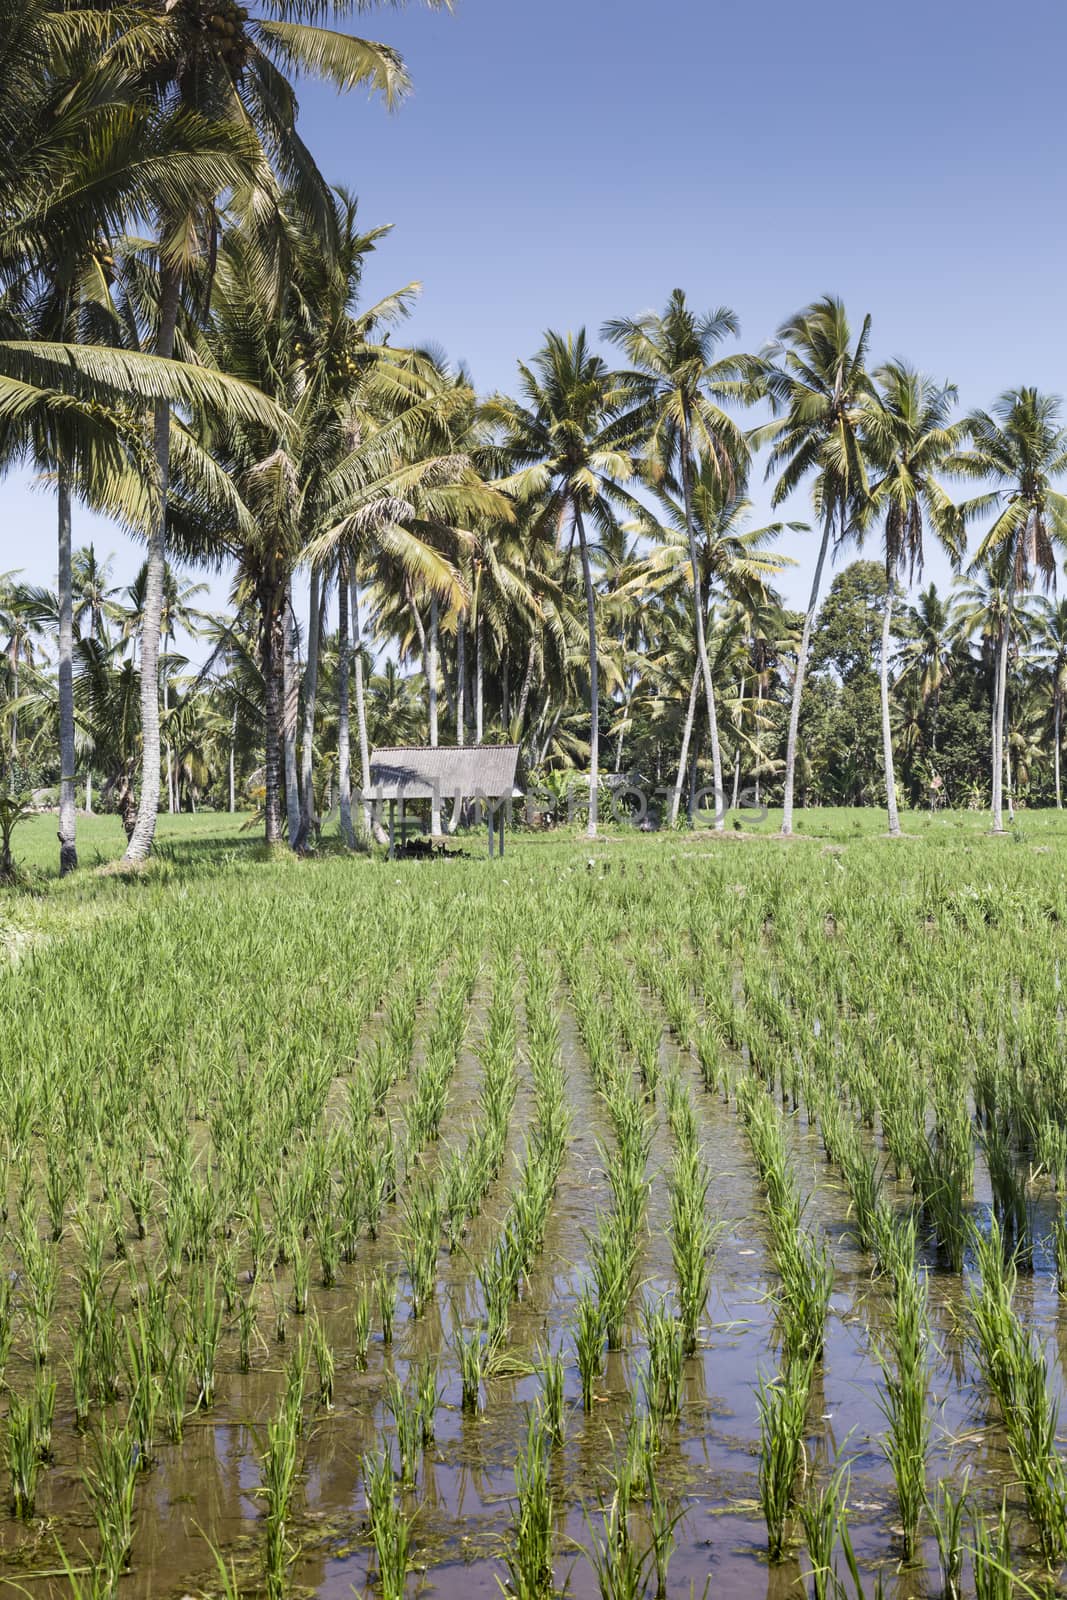 Bali terrace rice fields with palm trees behind. by mariusz_prusaczyk